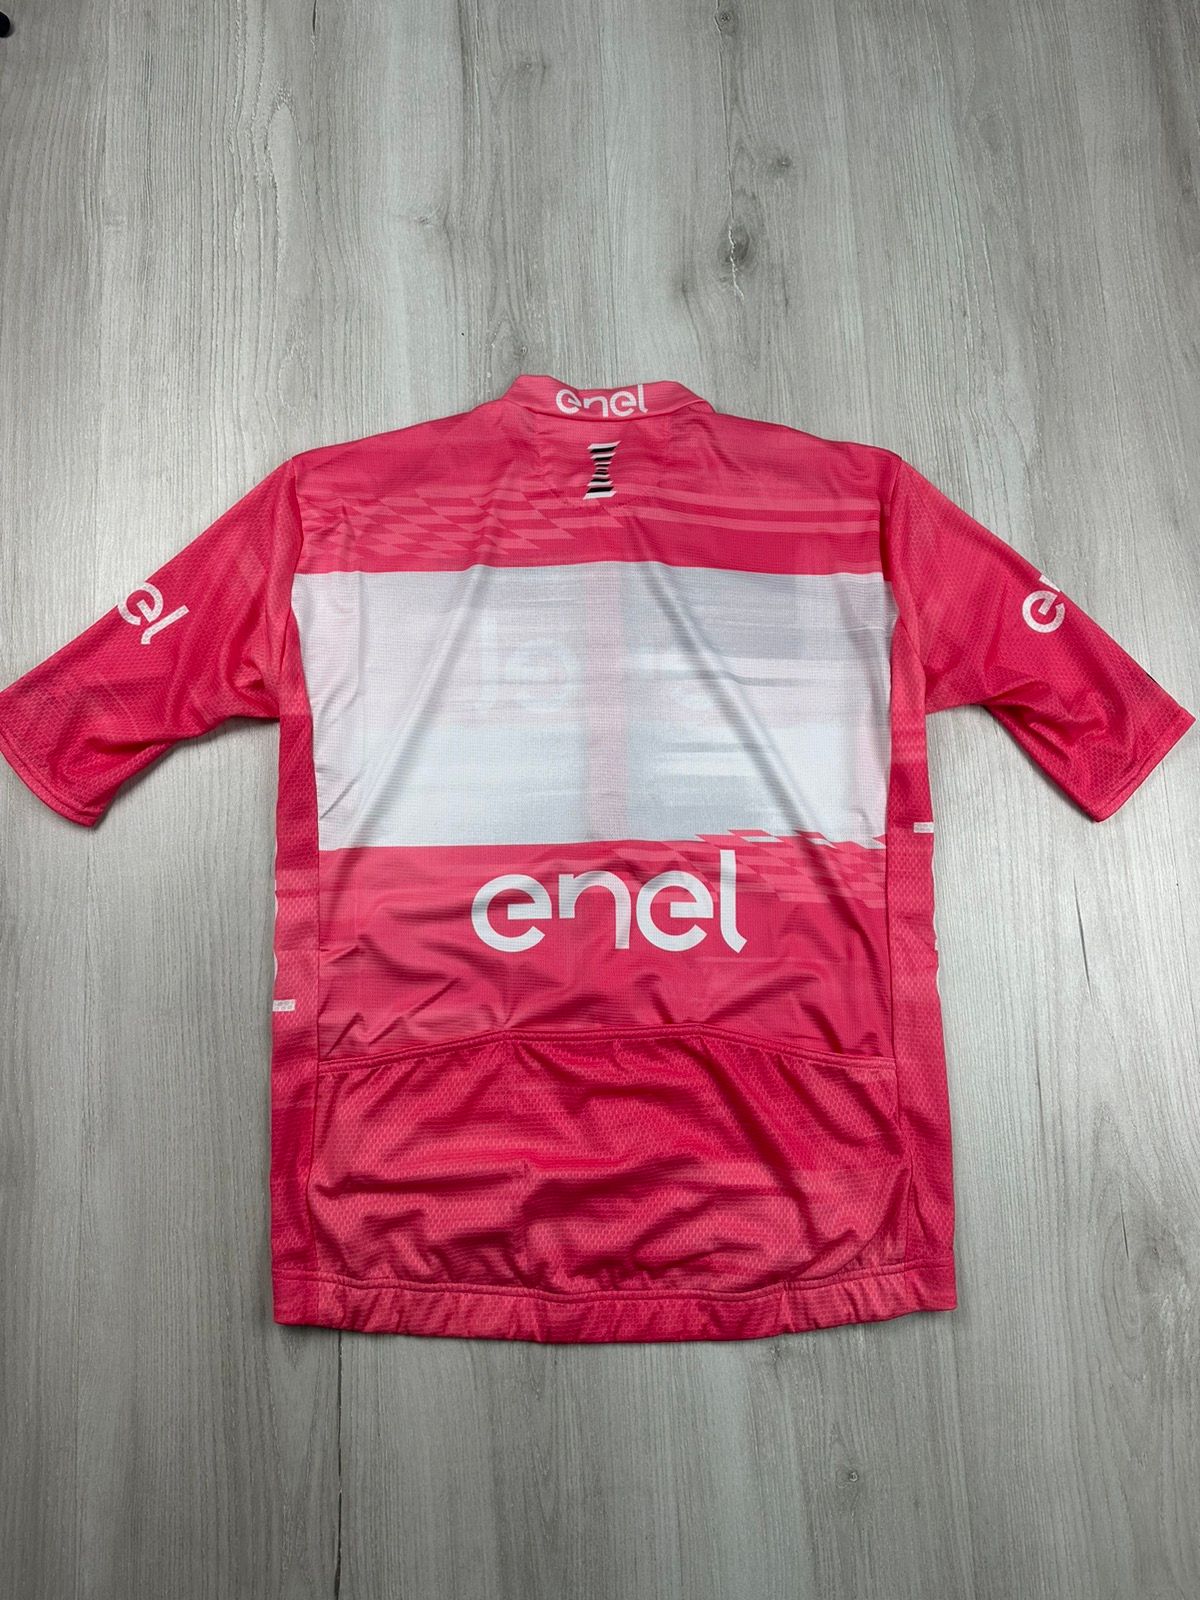 Cycle Castelli x Giro D italia Cycling Shirt Jersey Size US XL / EU 56 / 4 - 8 Thumbnail